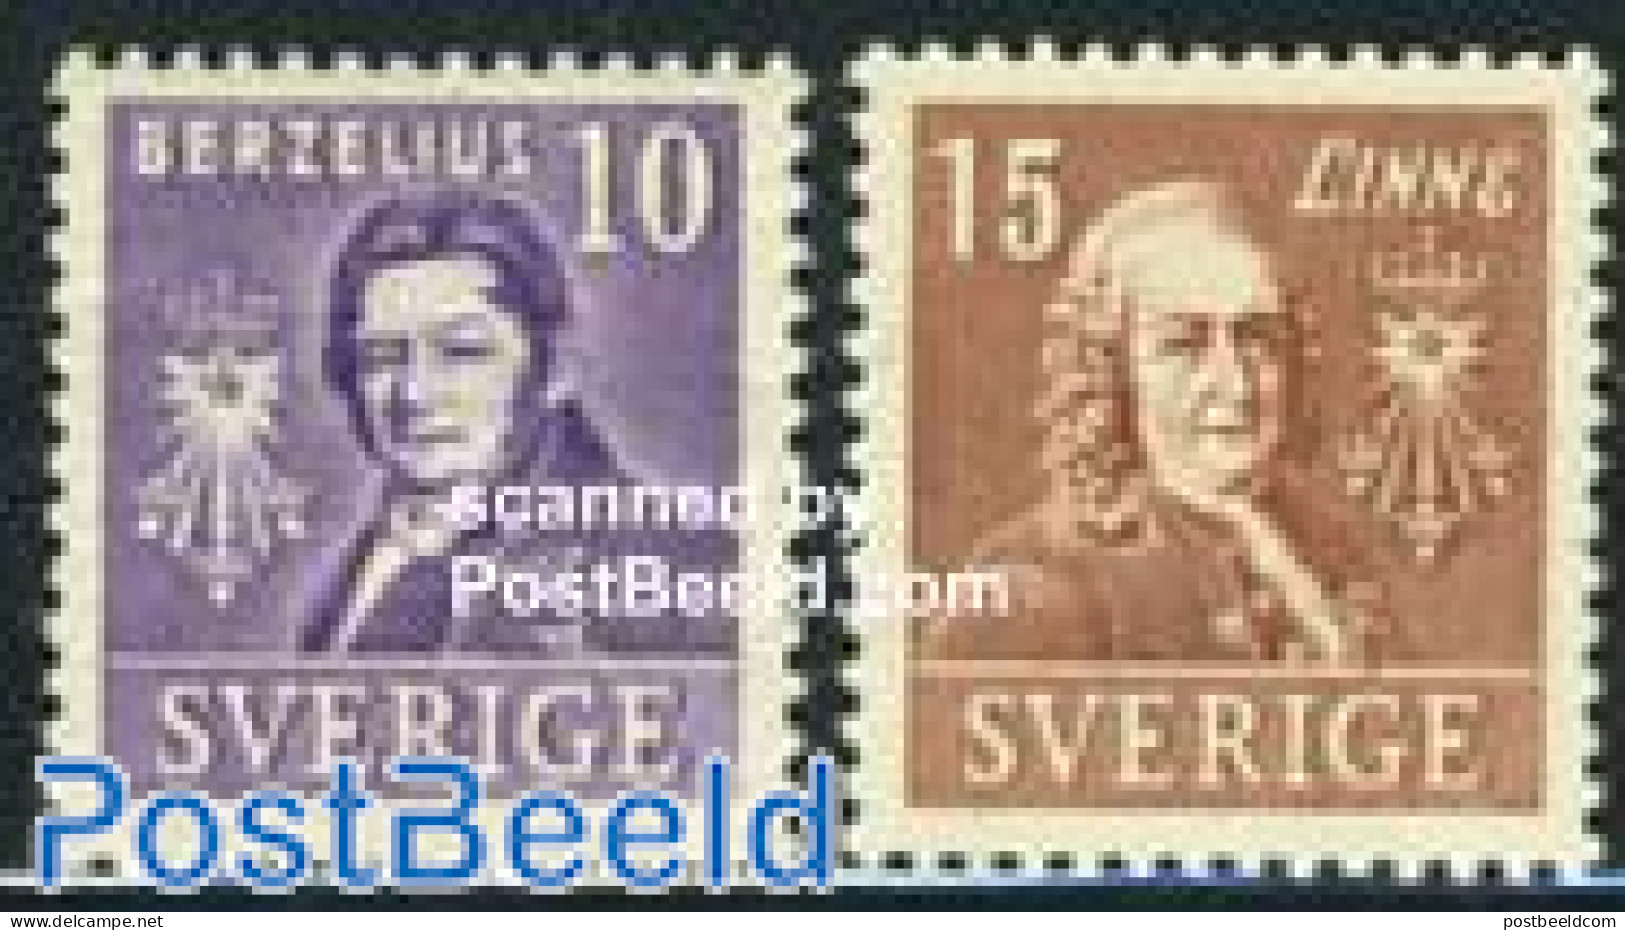 Sweden 1939 Linne/Berzelius 2v, Mint NH, Health - Science - Health - Chemistry & Chemists - Nuovi